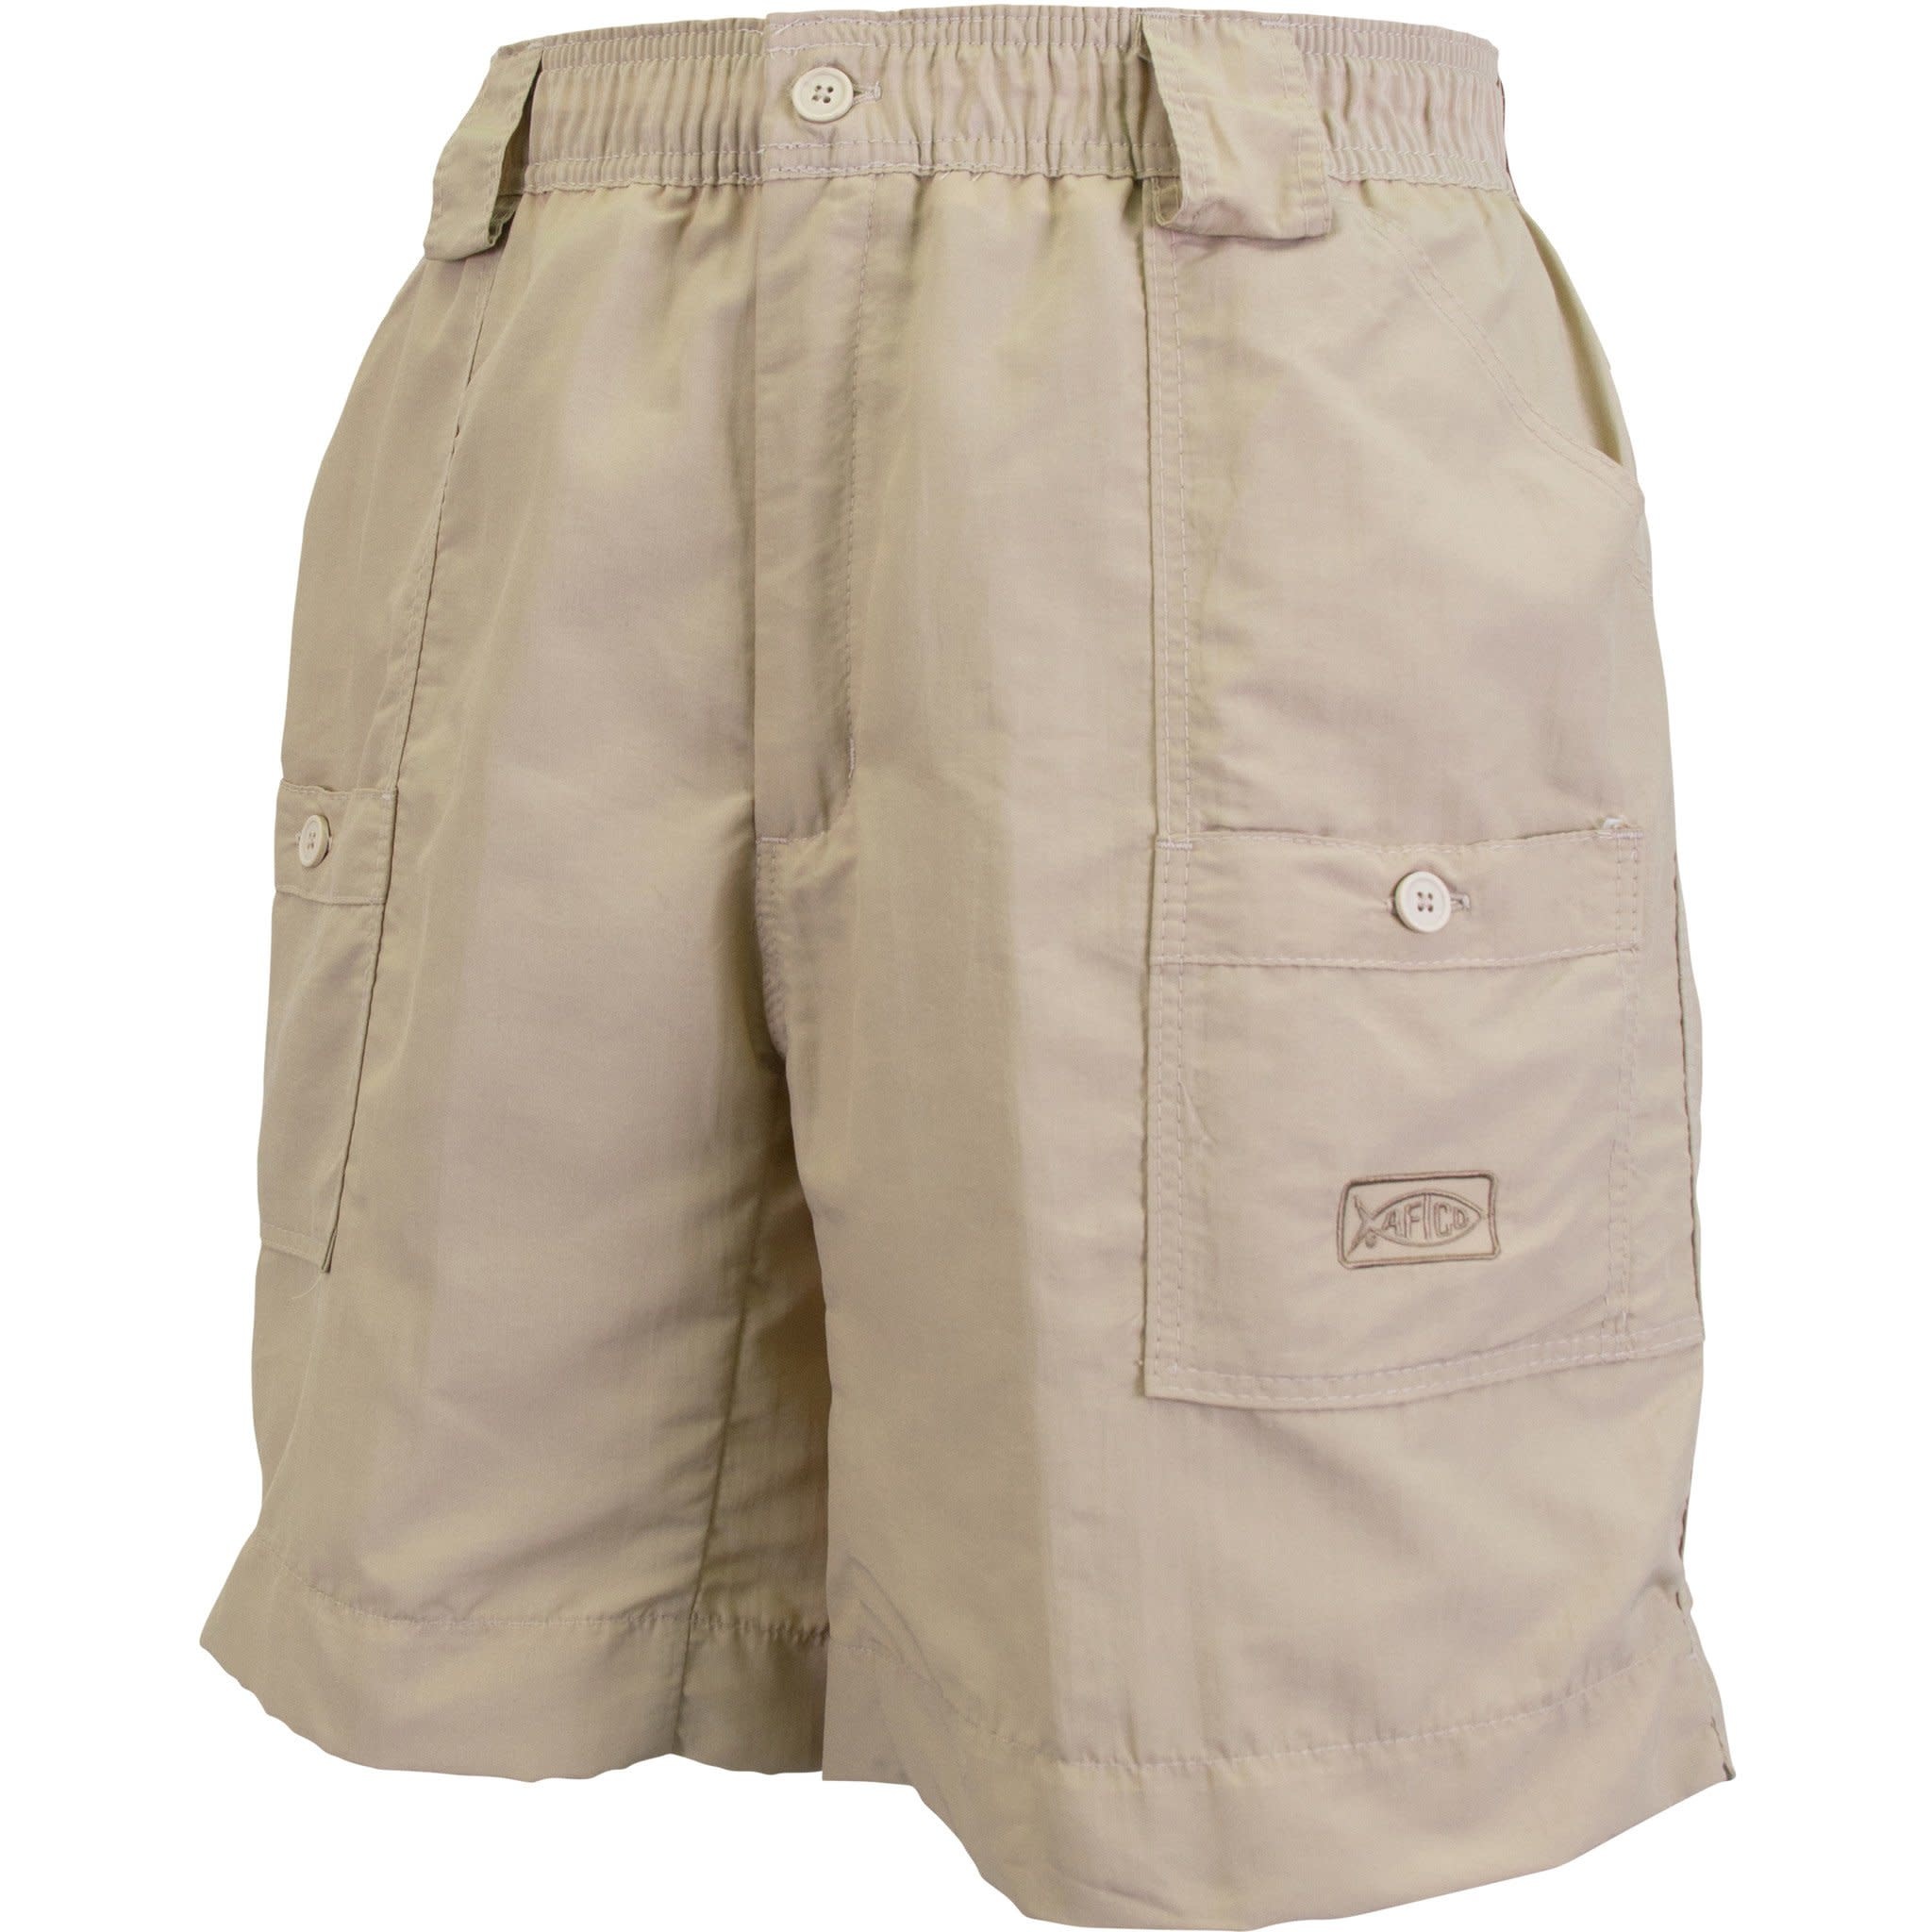 Aftco Original Fishing Shorts Long (Khaki) - Rock Outdoors